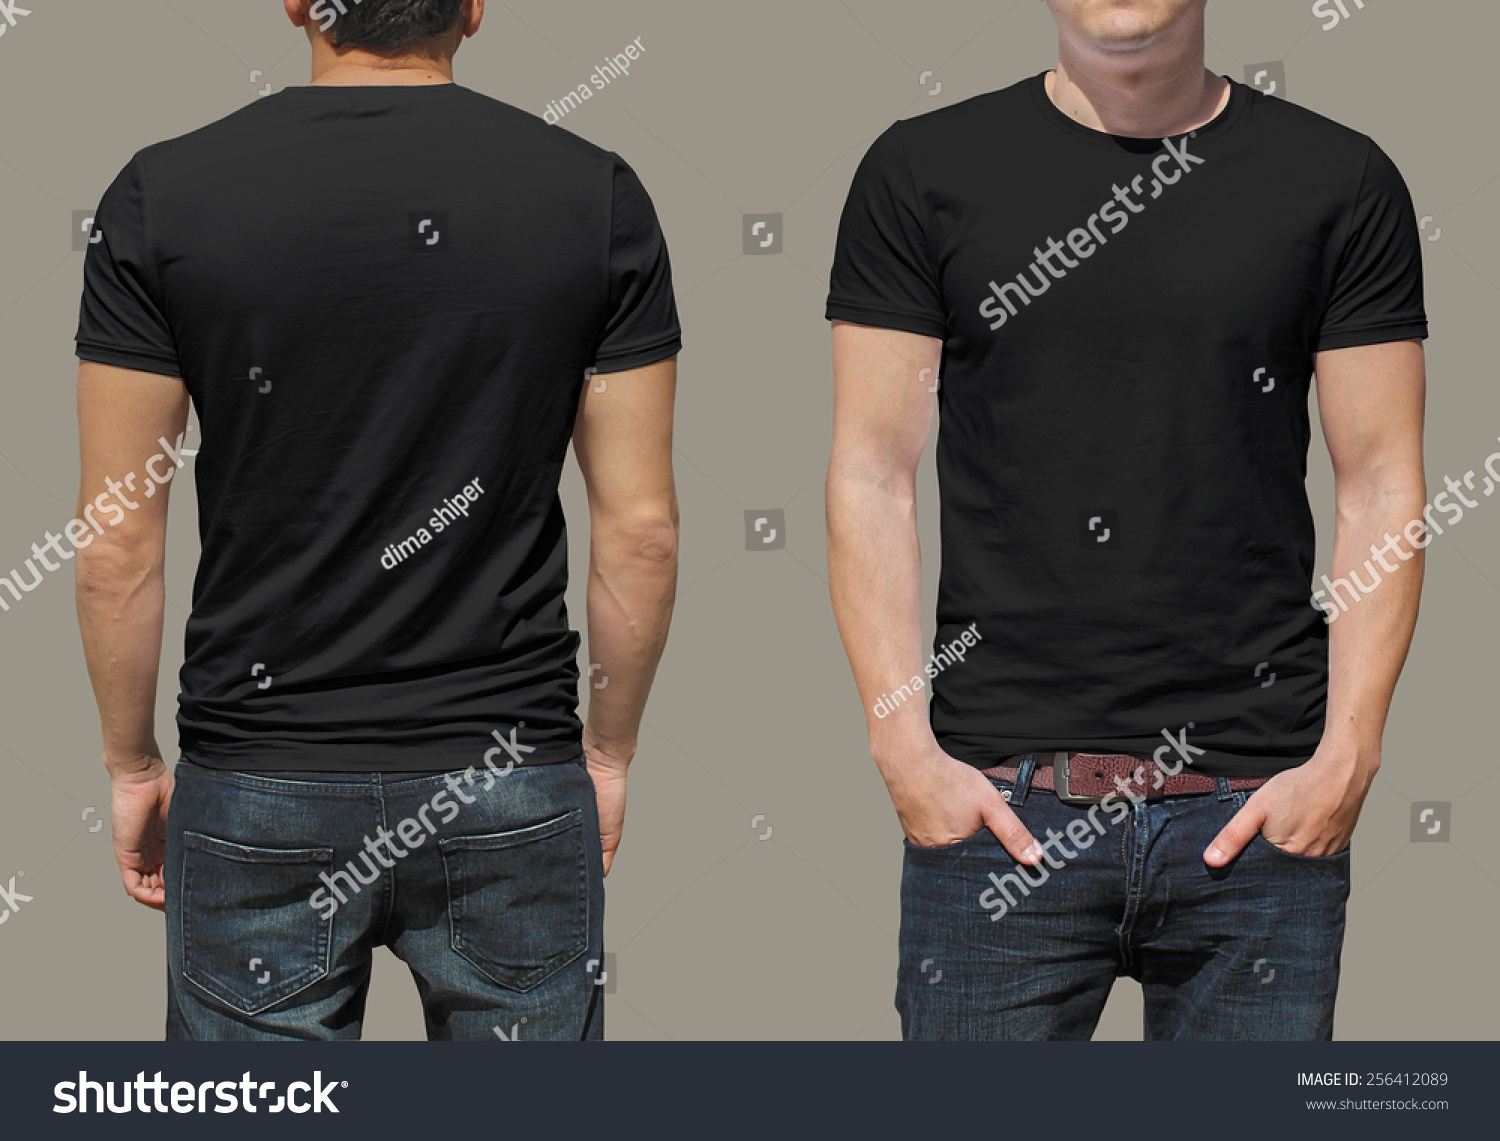 Tshirt Template Stock Photo 256412089 | Shutterstock